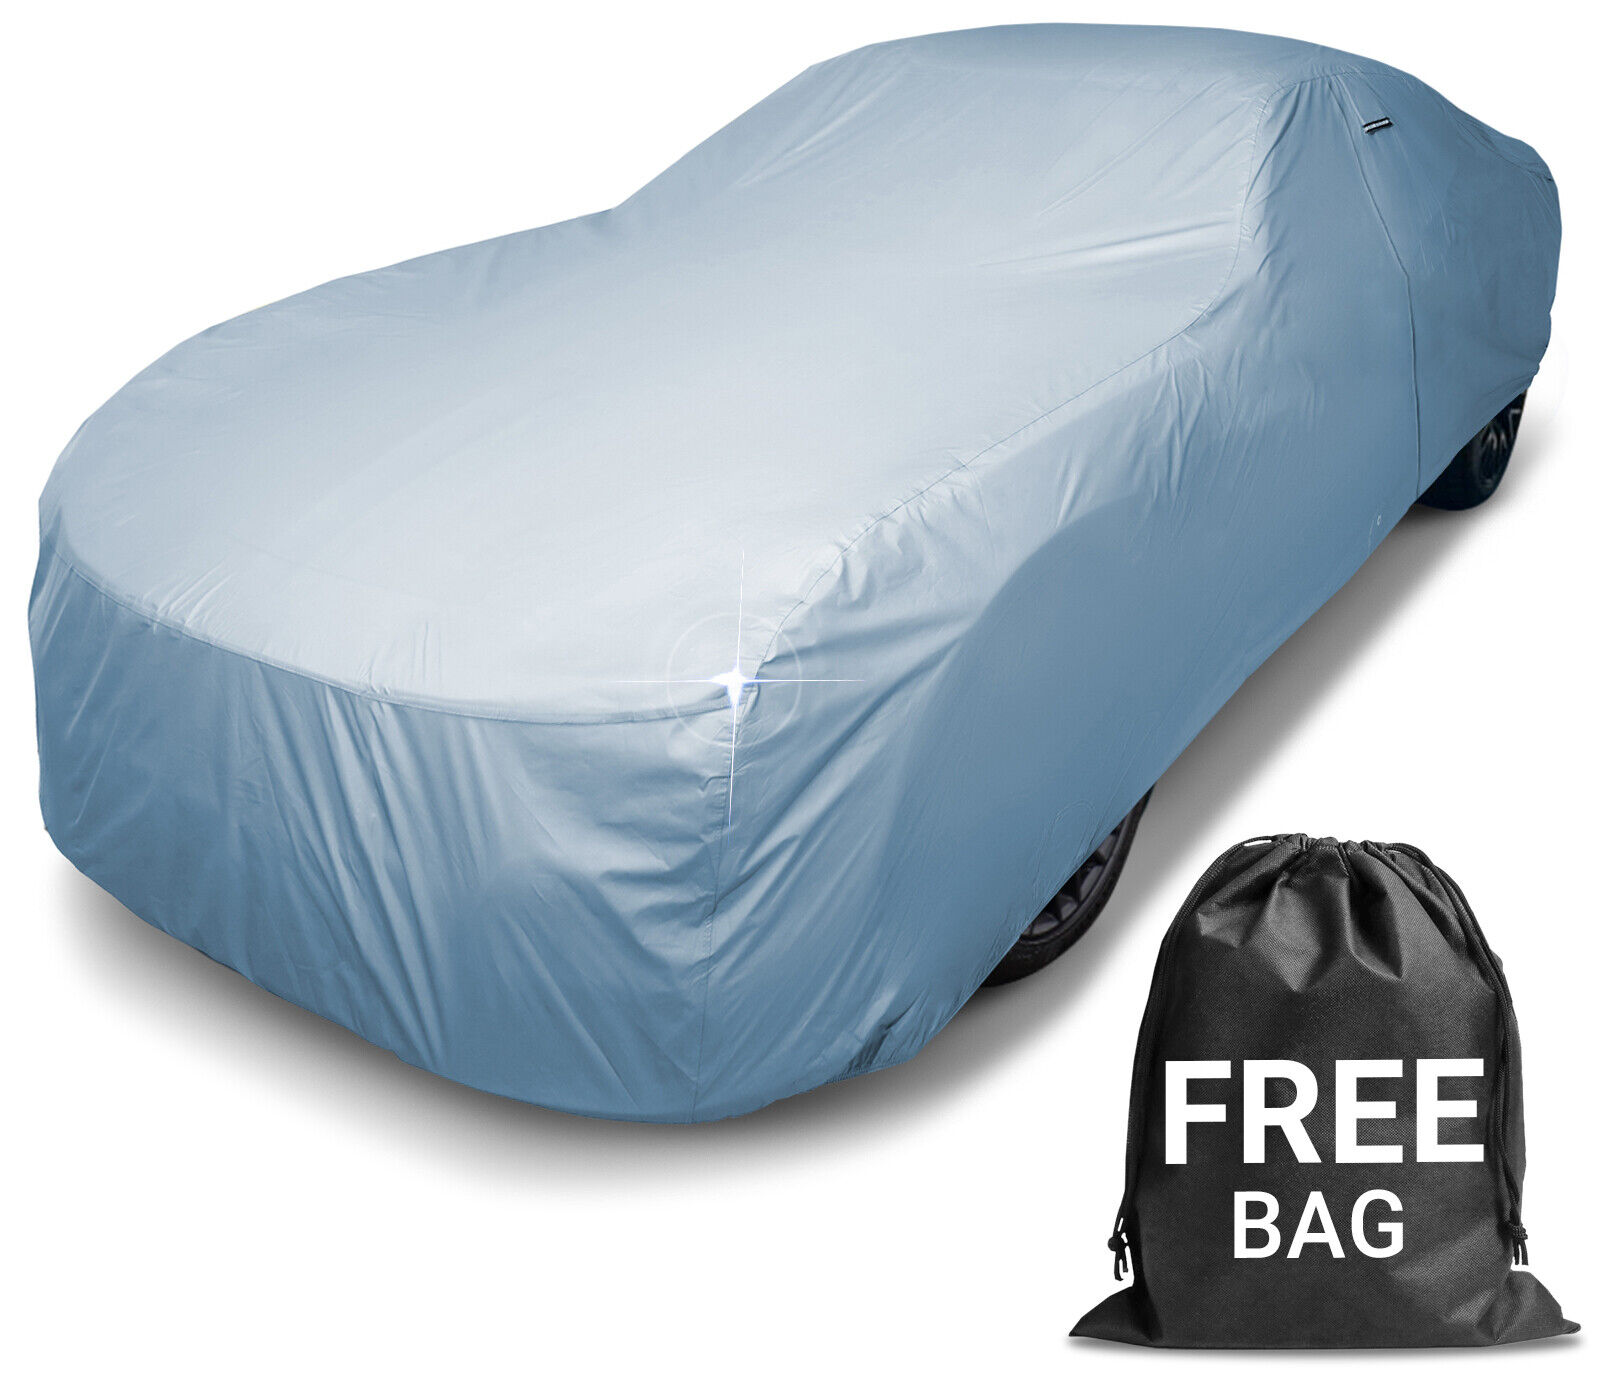 PONTIAC [LEMANS] Premium Custom-Fit Outdoor Waterproof Car Cover